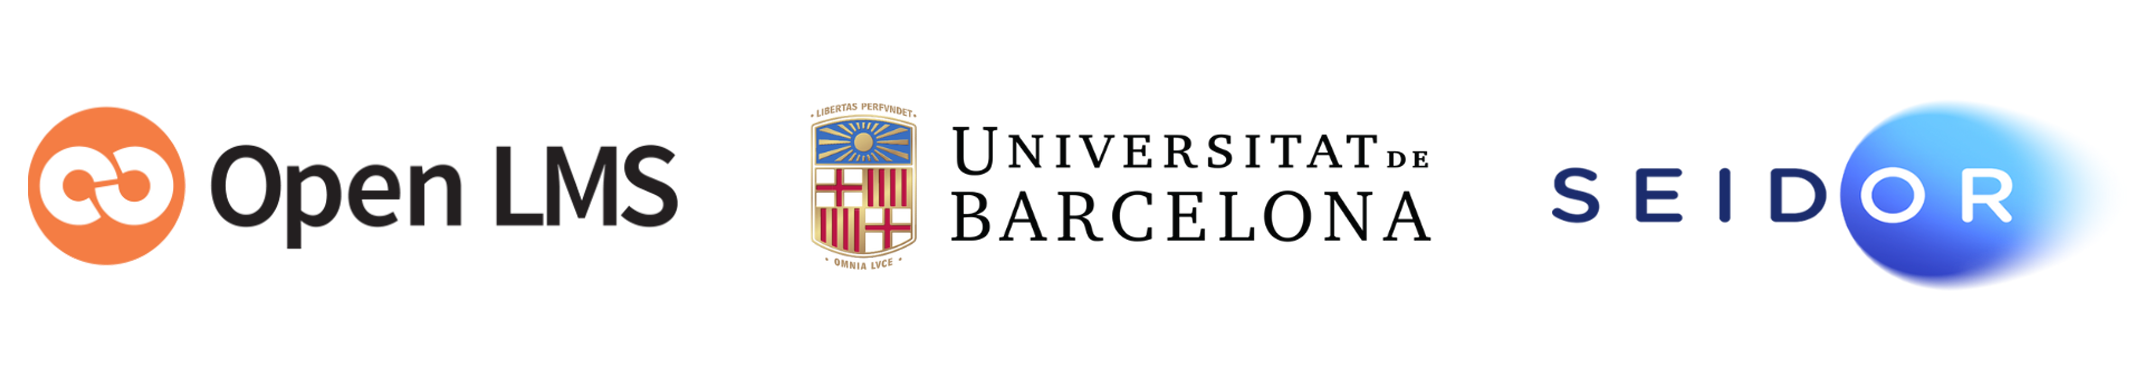 Open LMS - Universitat de Barcelona - SEIDOR